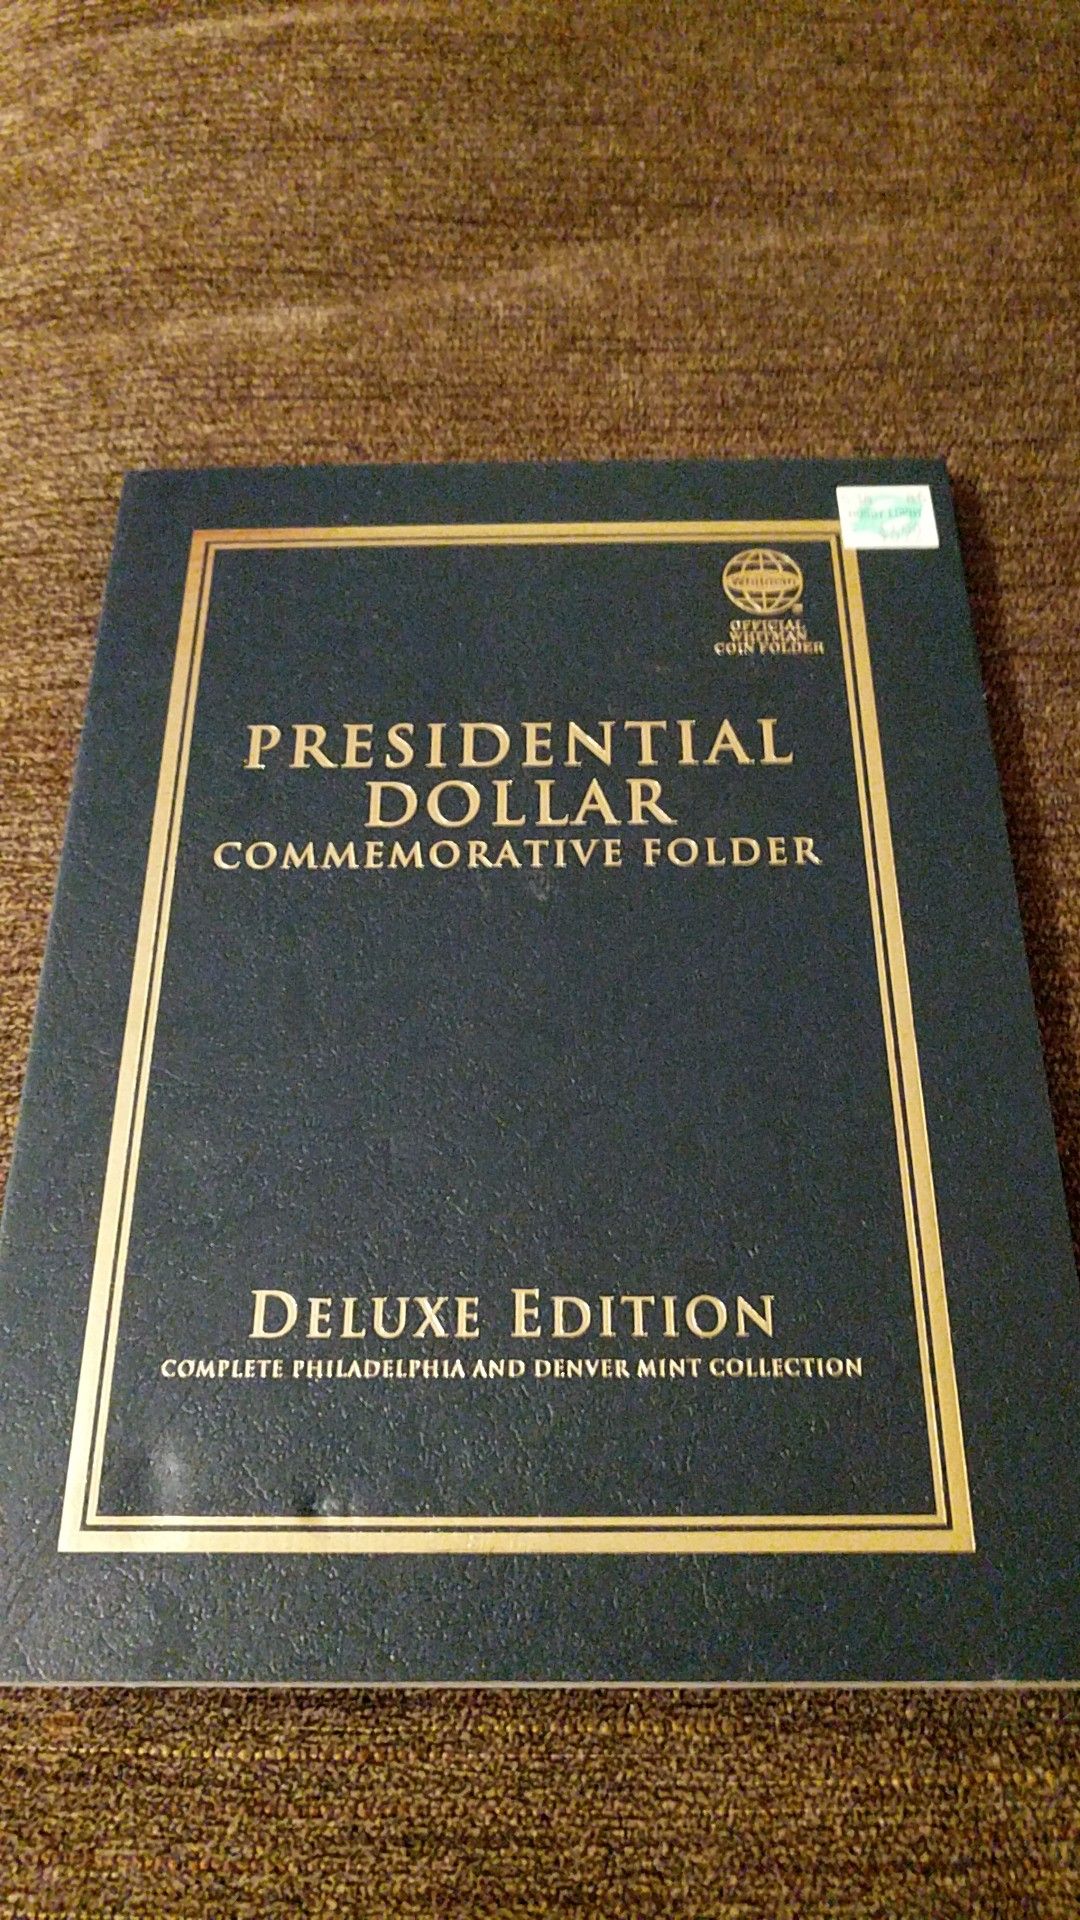 Presidential dollar coin album